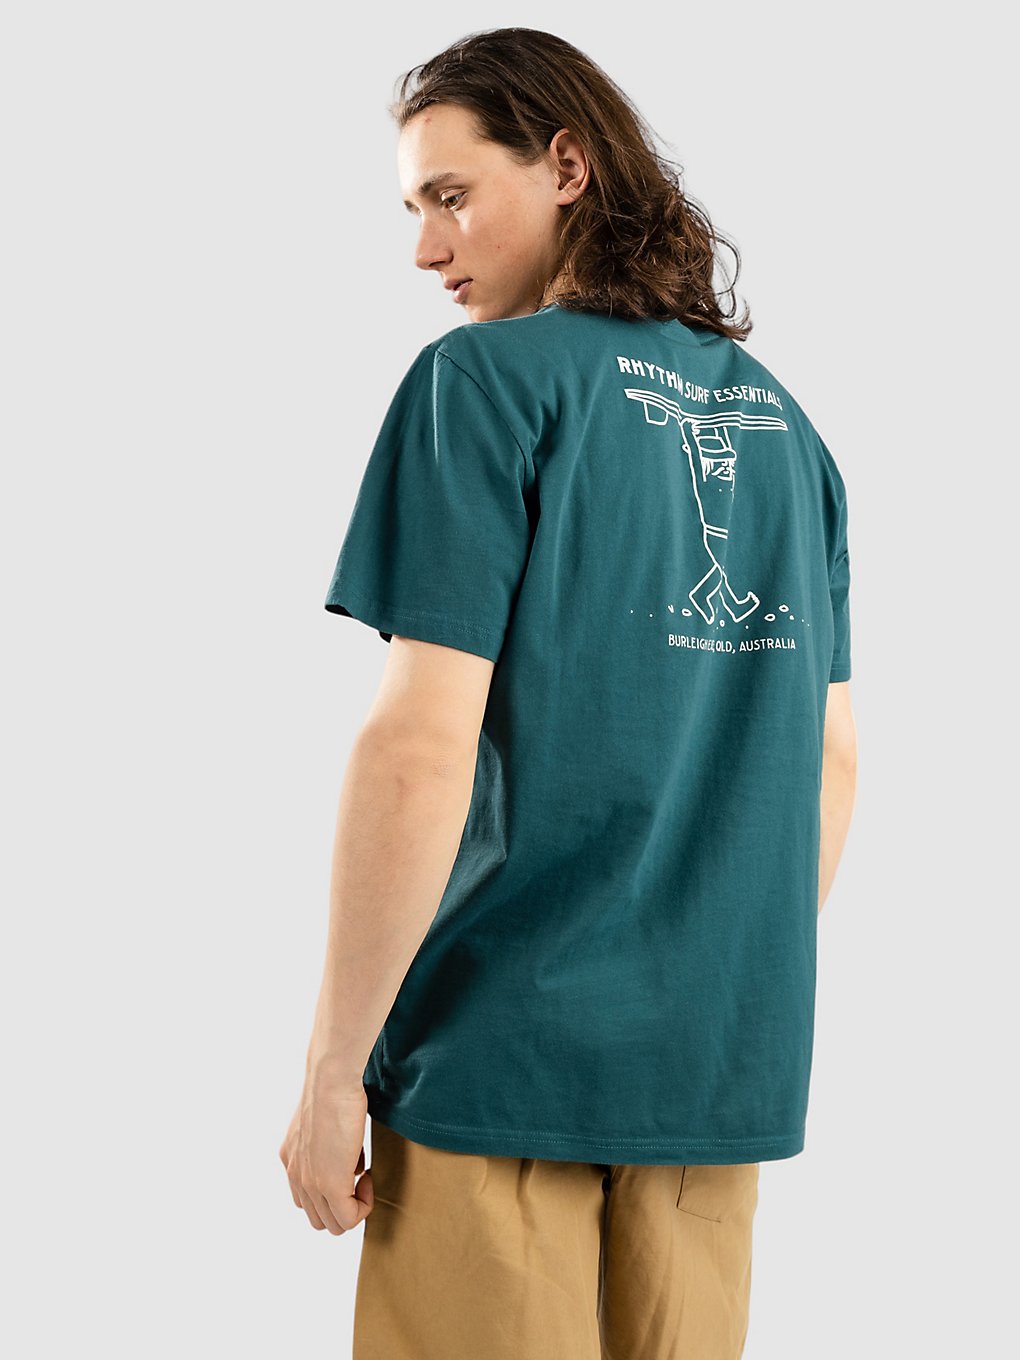 Rhythm Wanderer T-Shirt teal kaufen